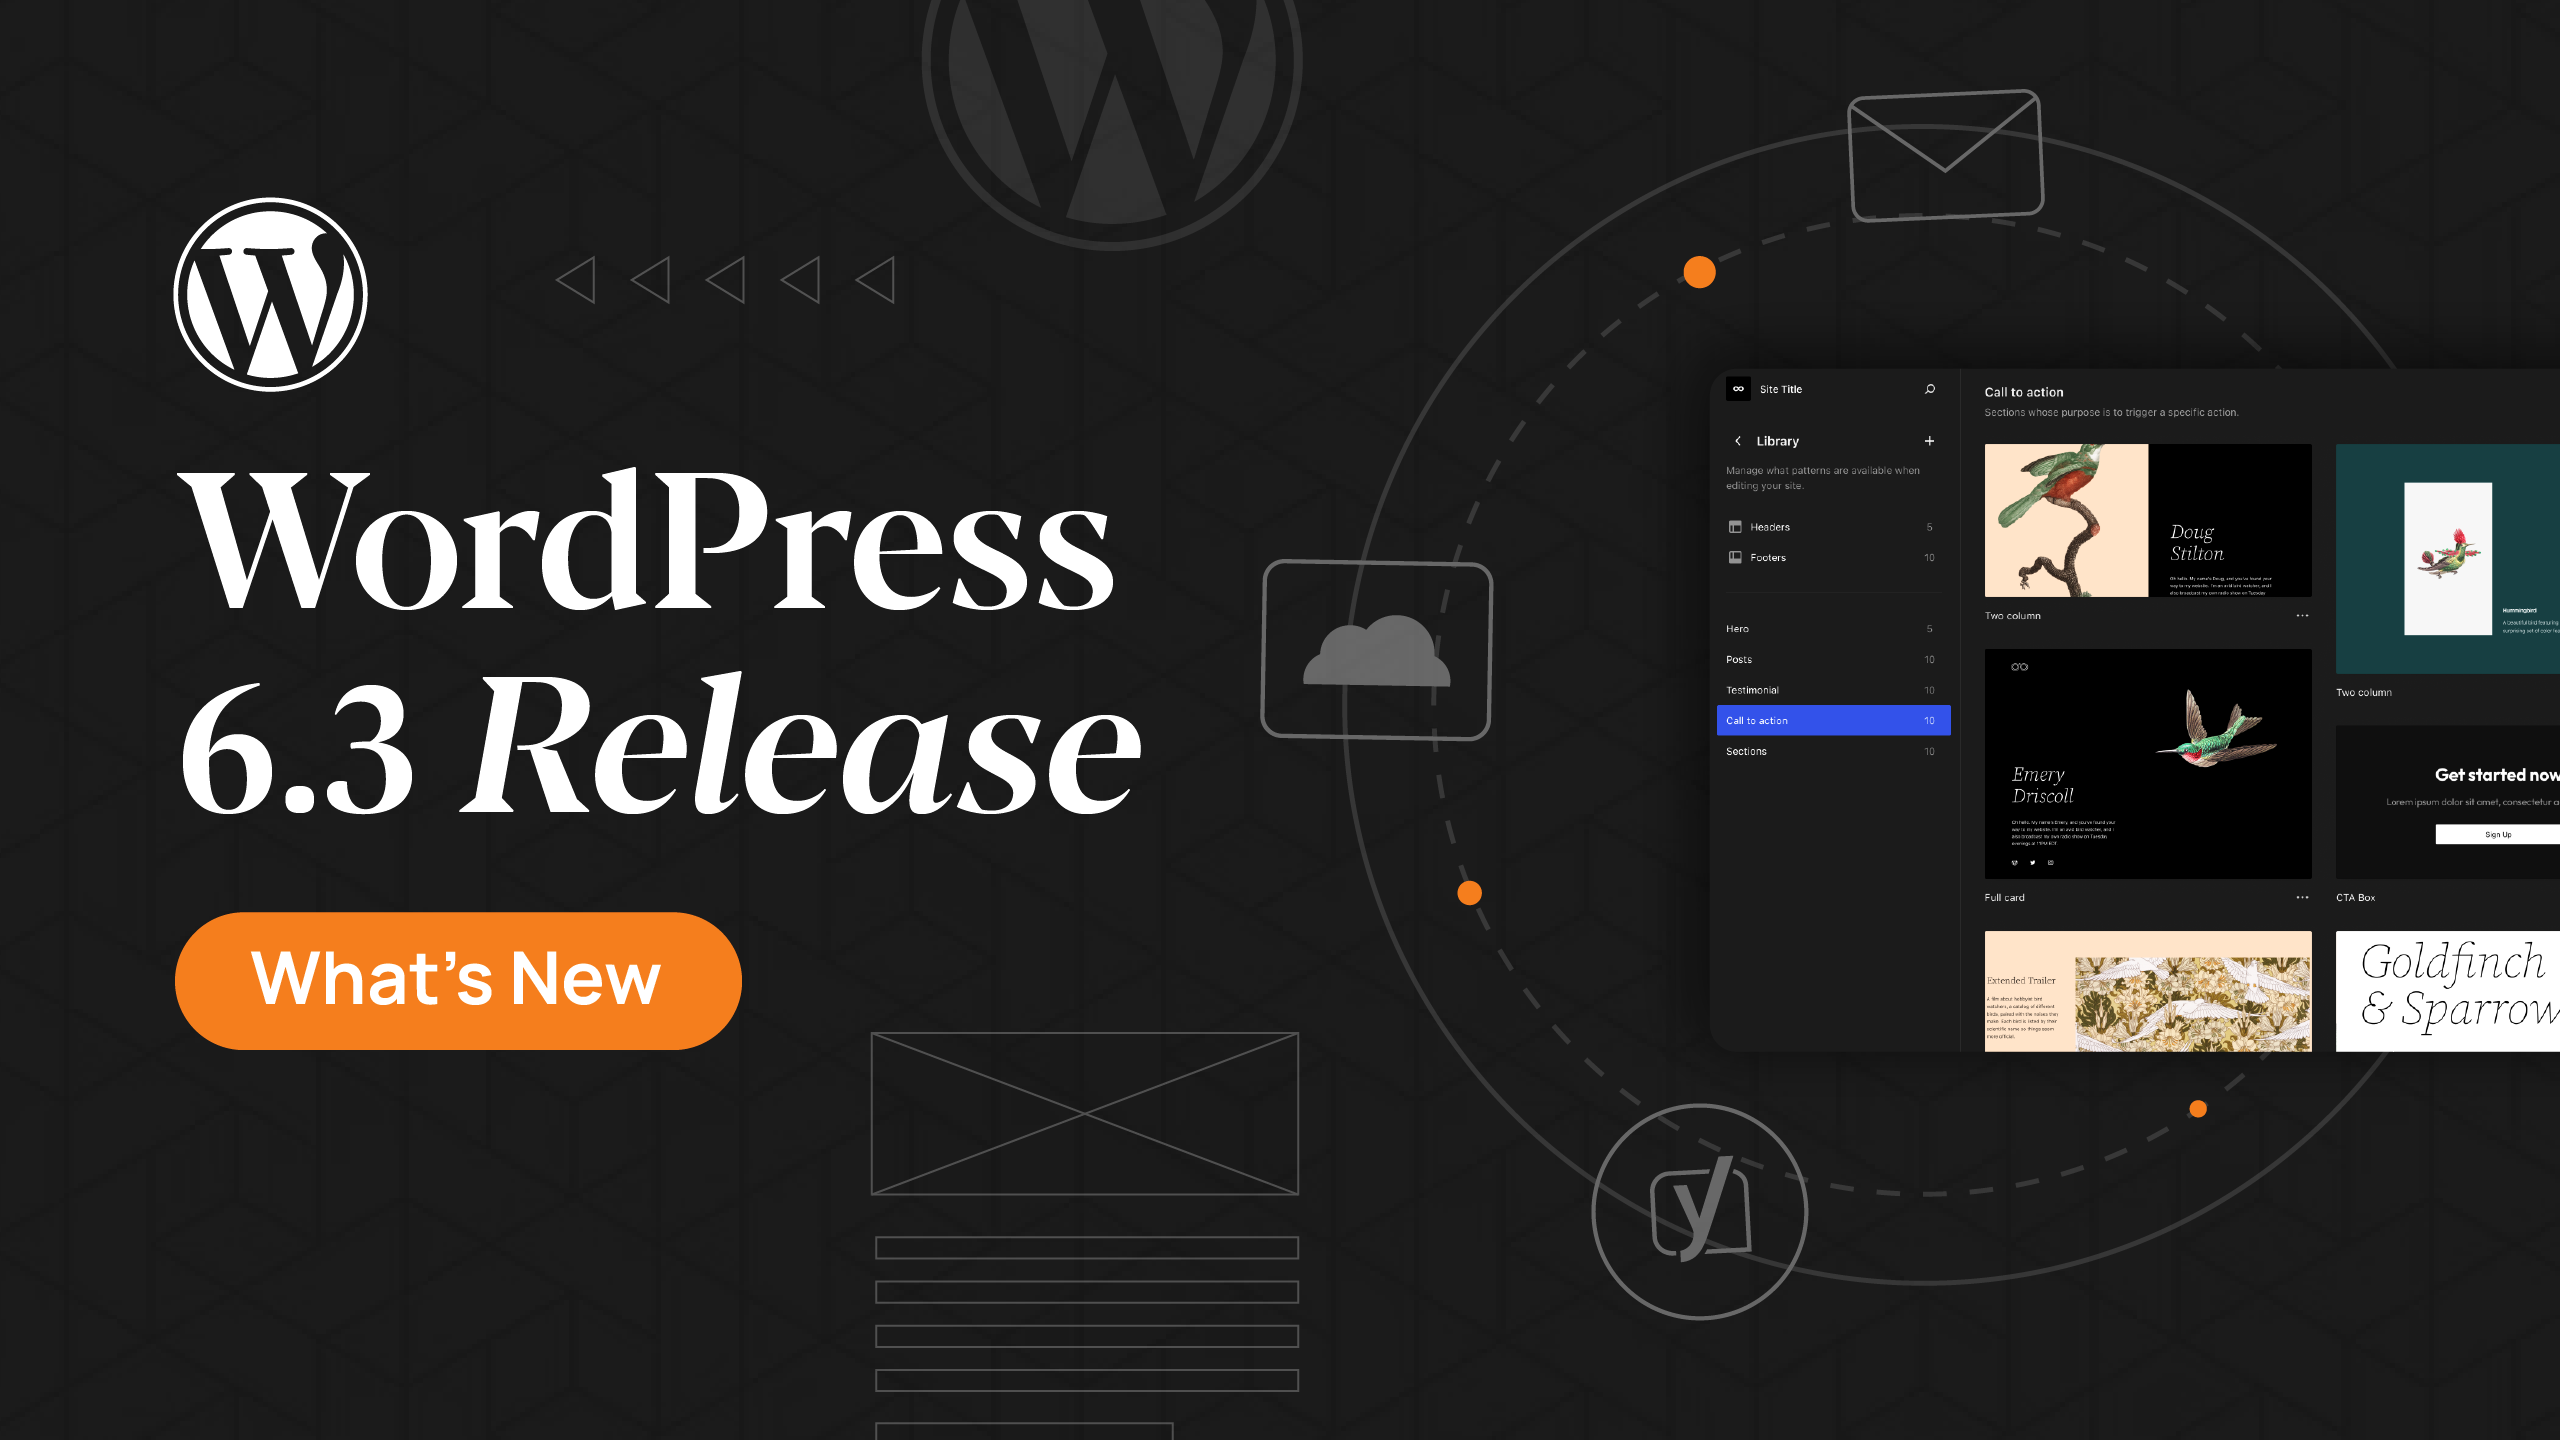 WordPress 6.3 Release: What’s New